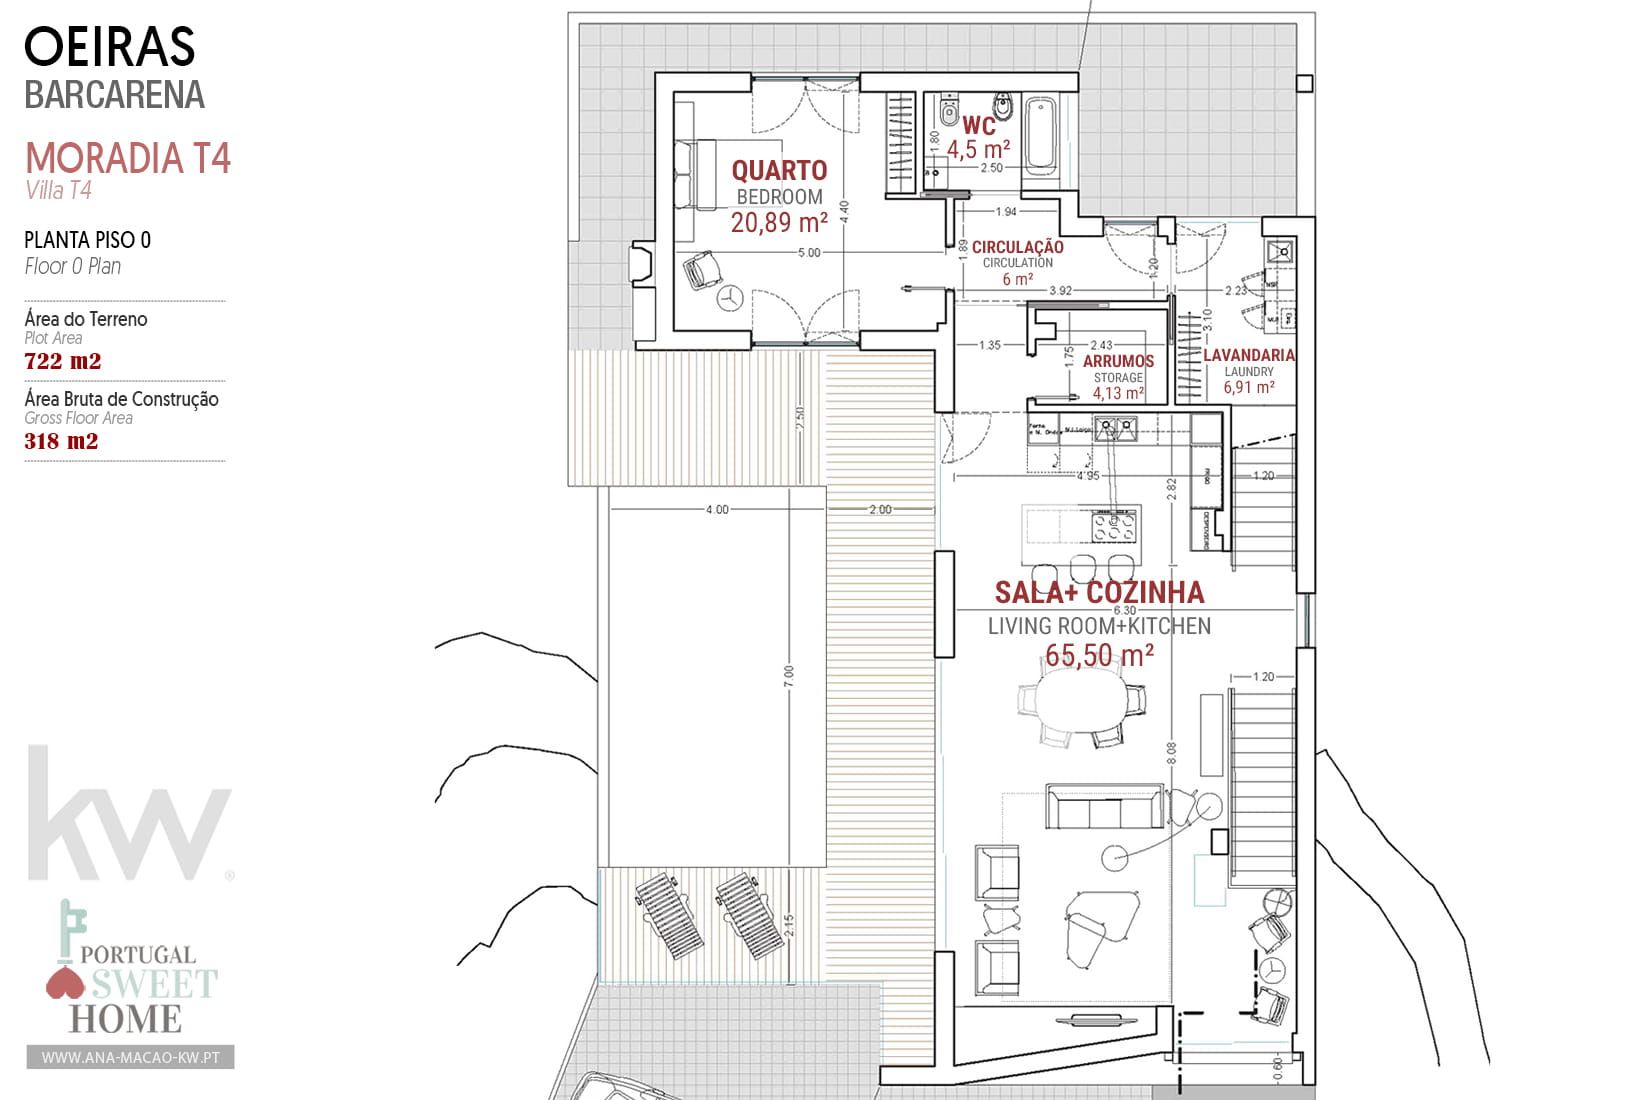 Plan d'étage 1 - Espace social